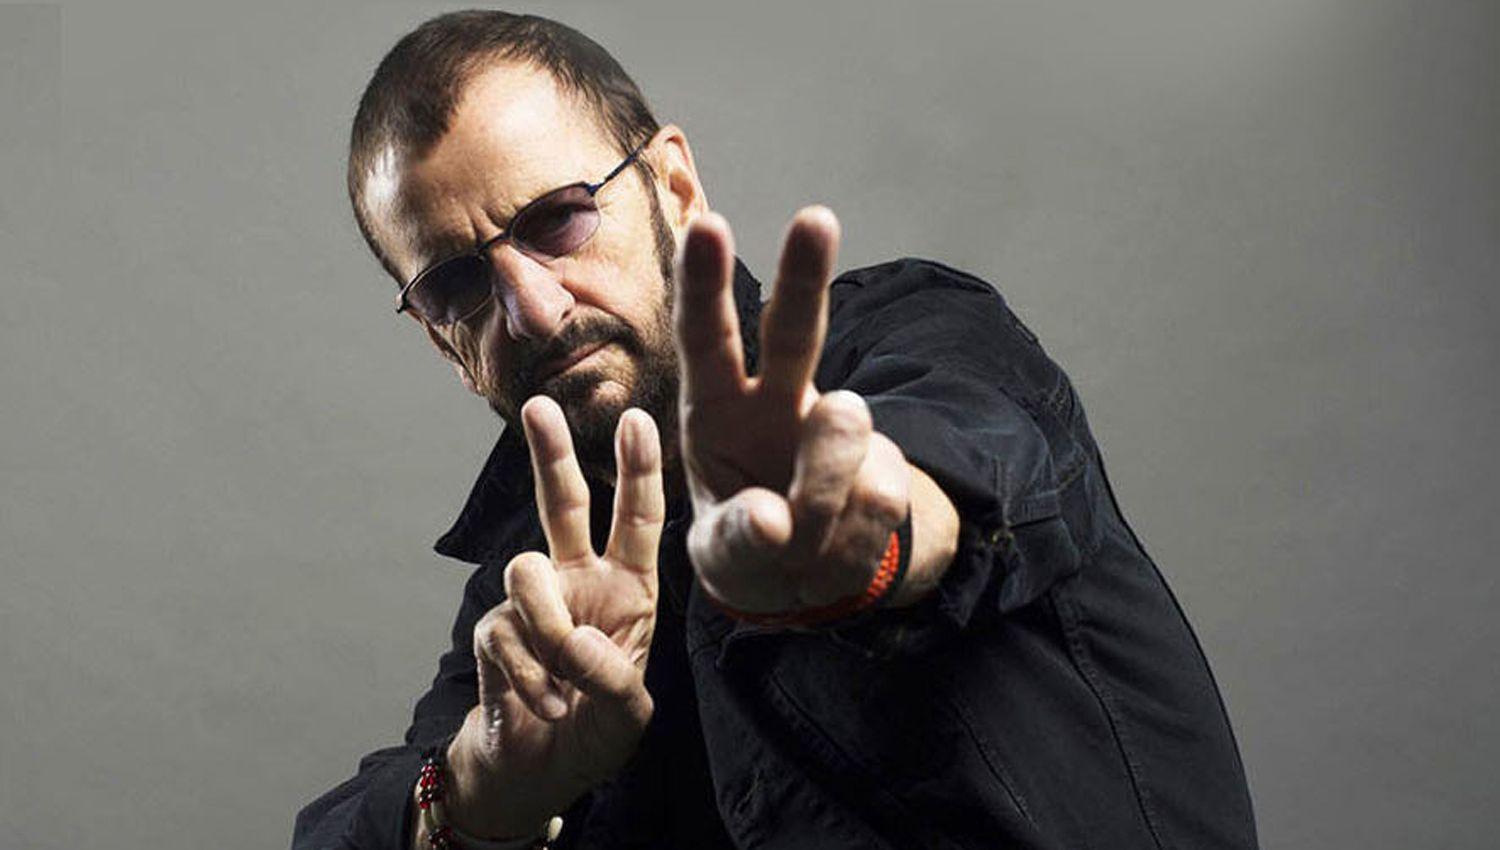 Ringo Starr haraacute su esperada gira recieacuten en el 2021